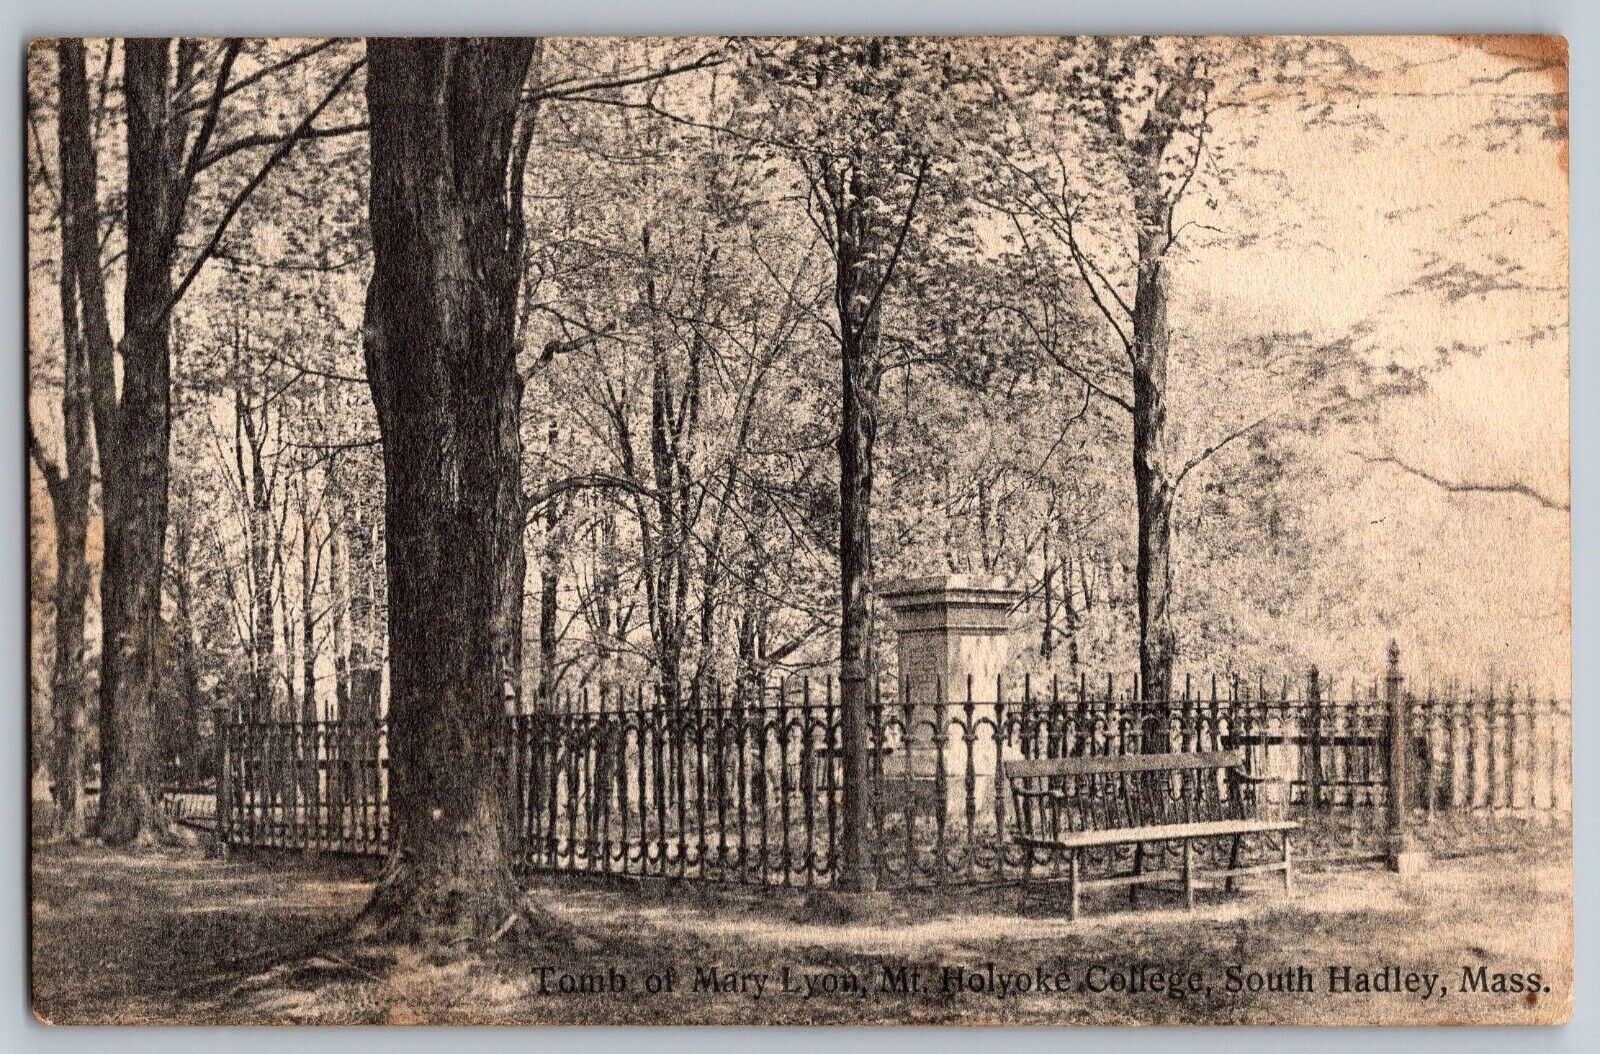 South Hadley, Massachusetts - Tomb of Mary Lyon, Mt. Holyoke - Vintage Postcard